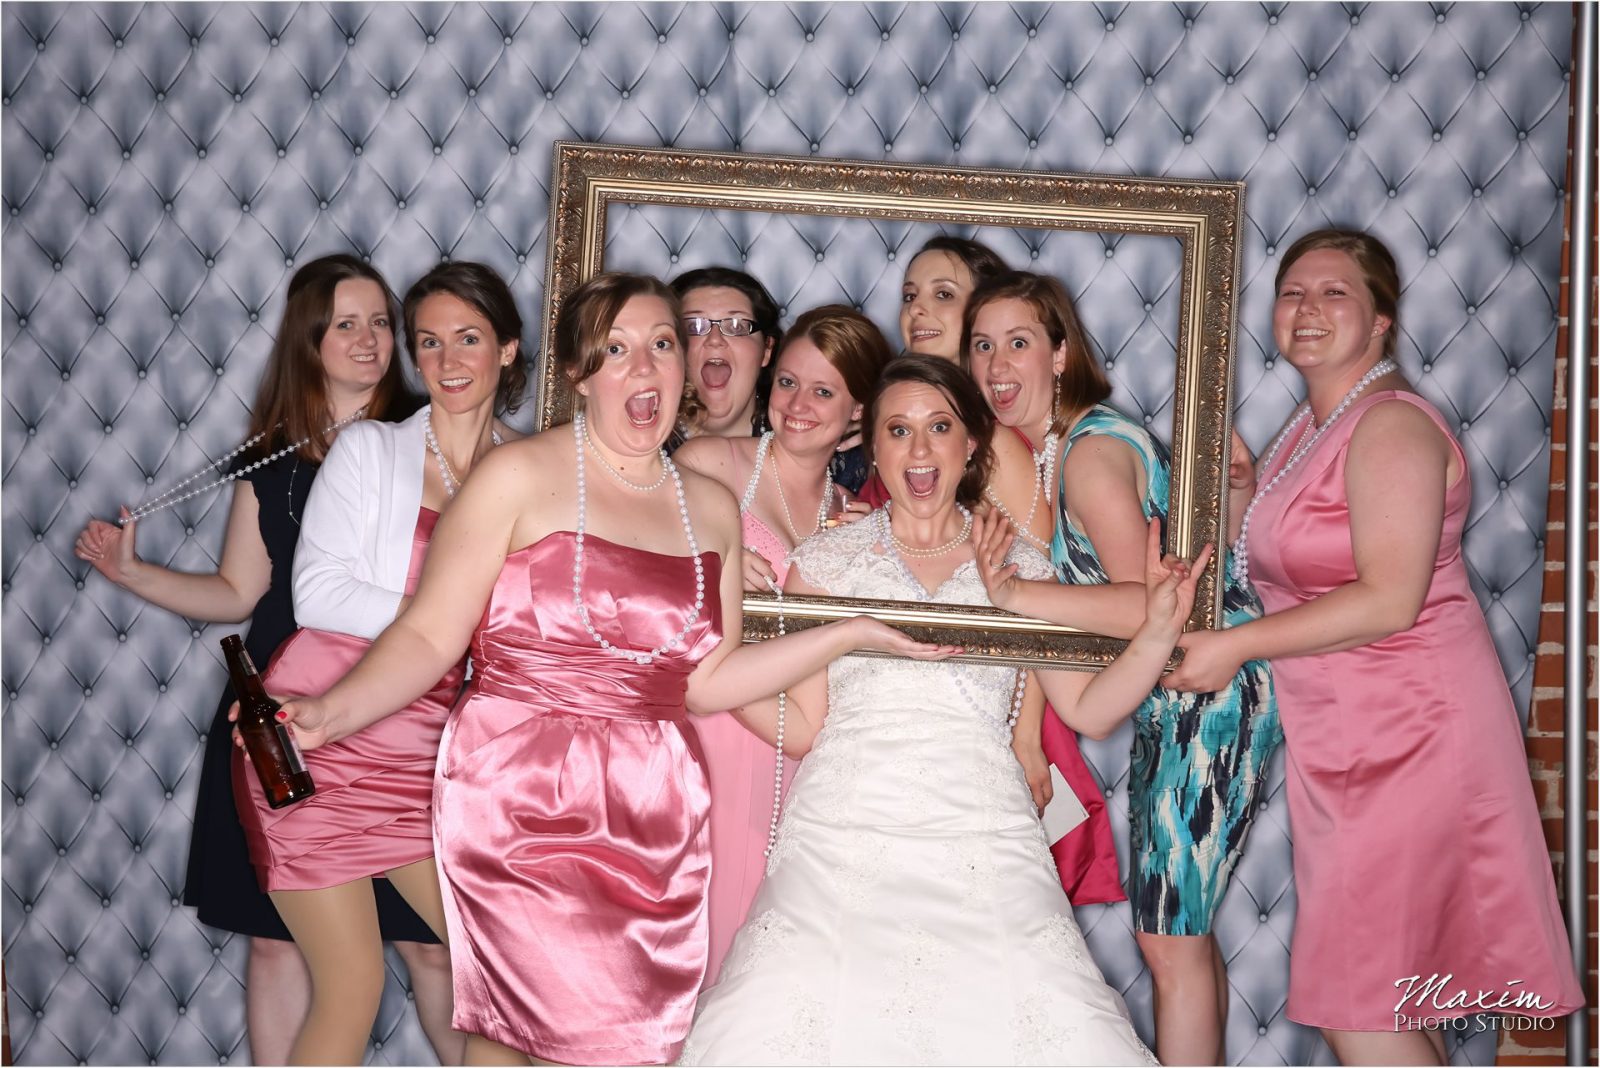 Unboxed Photo Booth Longworth Hall Wedding Reception